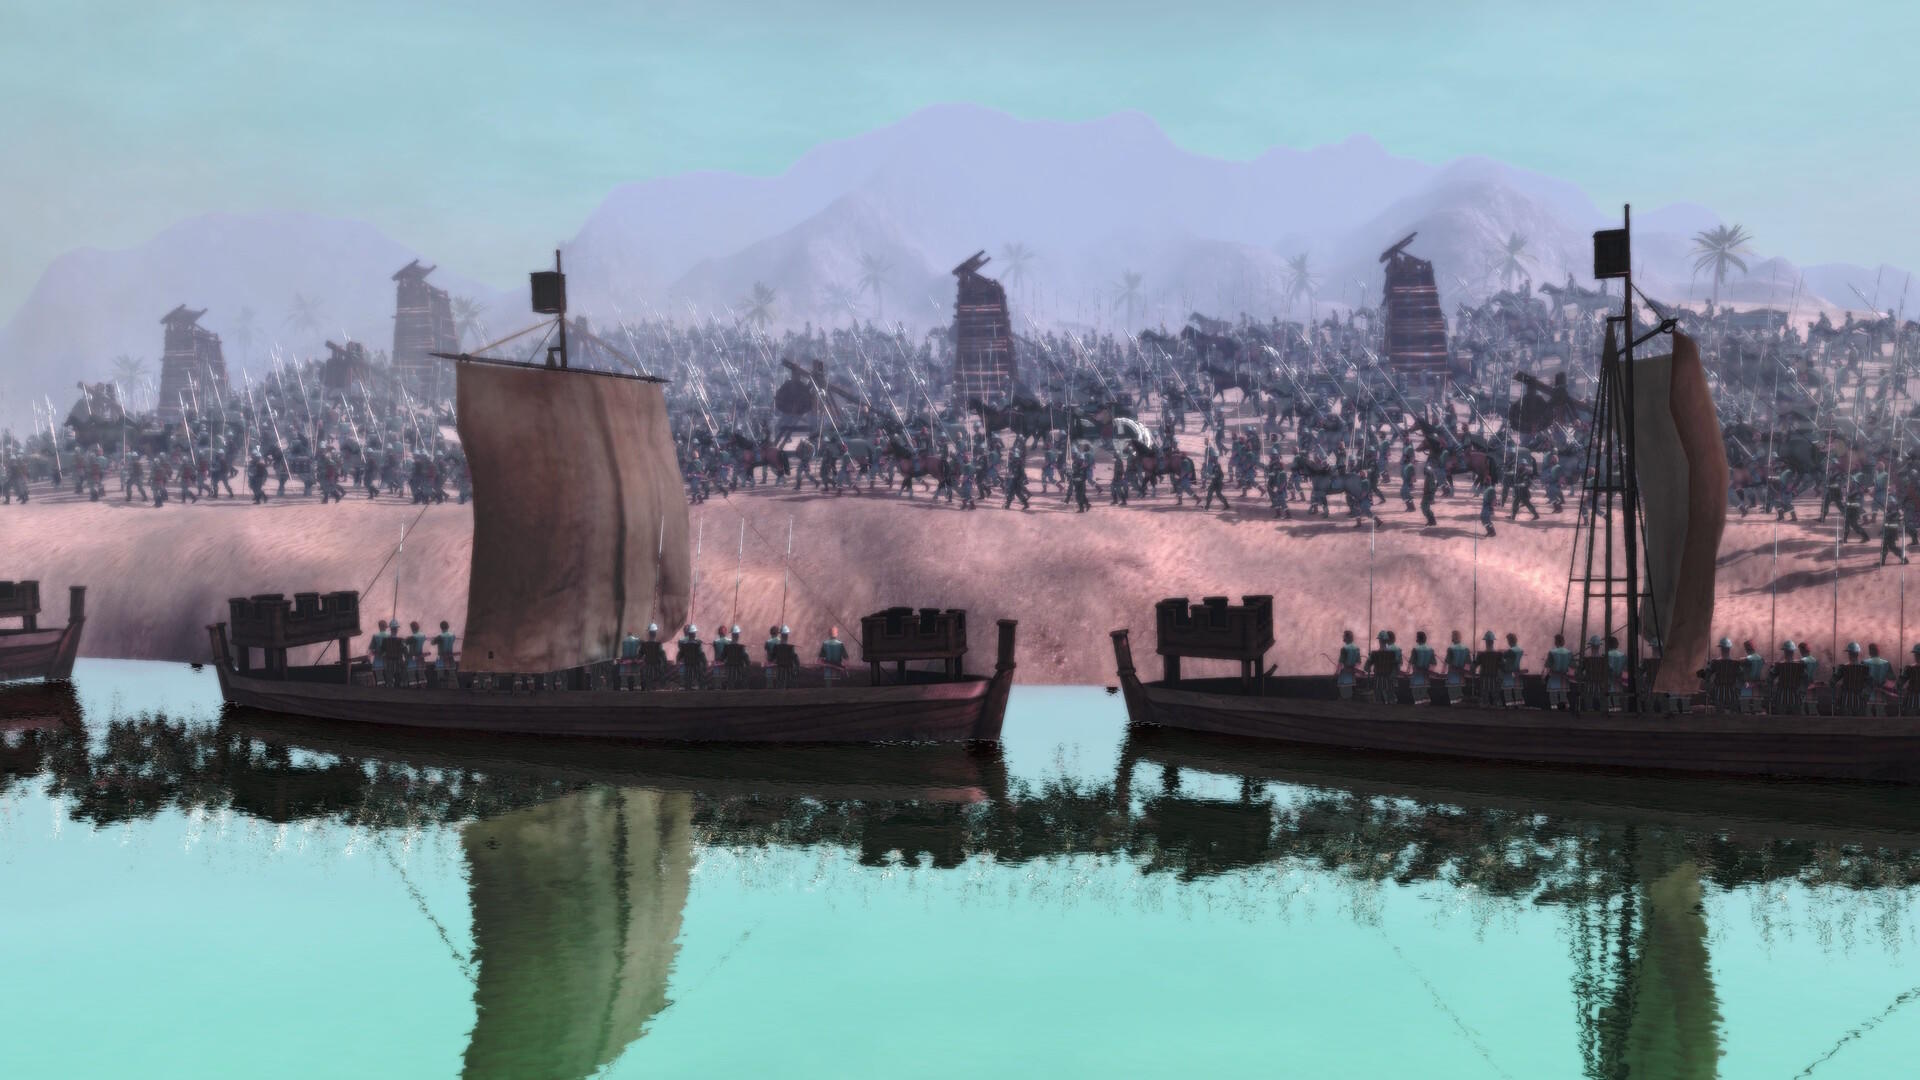 Renaissance Kingdom Wars - Prologue screenshot game